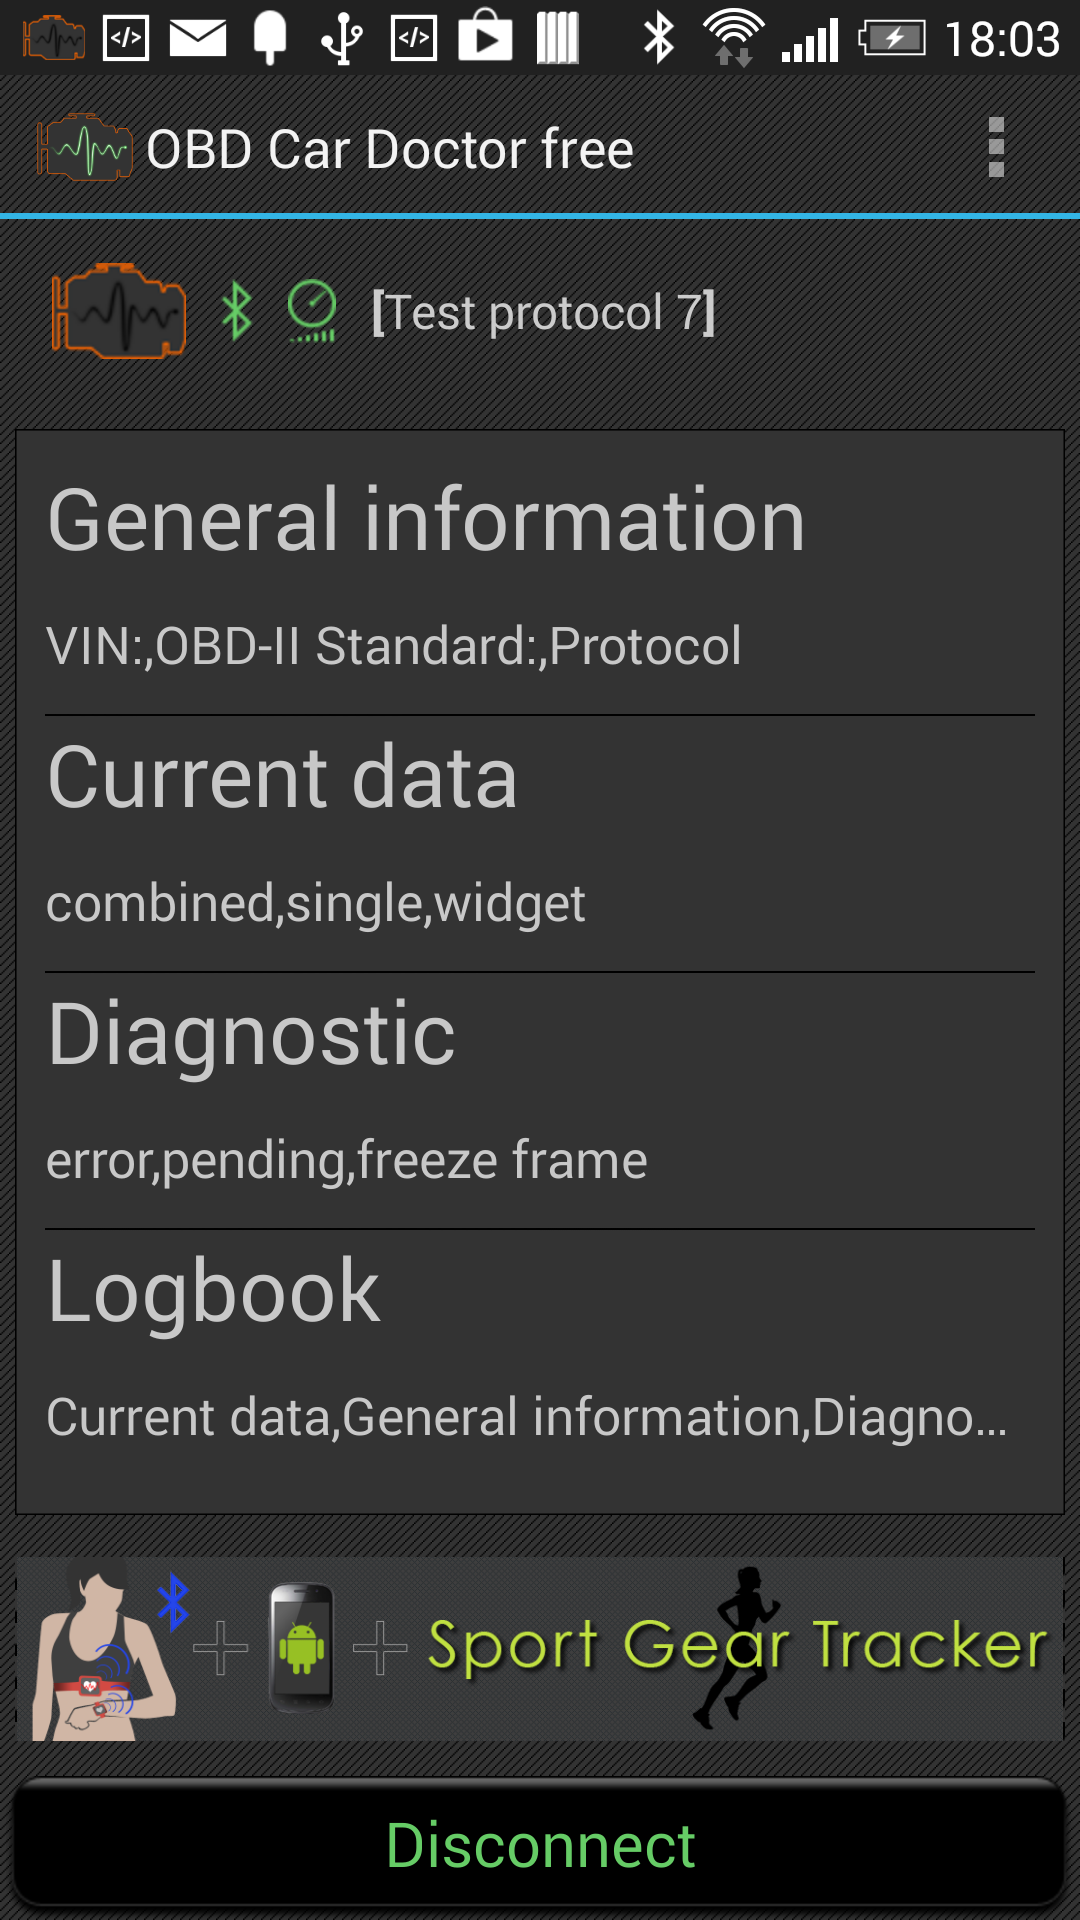 Android application inCarDoc - OBD2 ELM327 Scanner screenshort